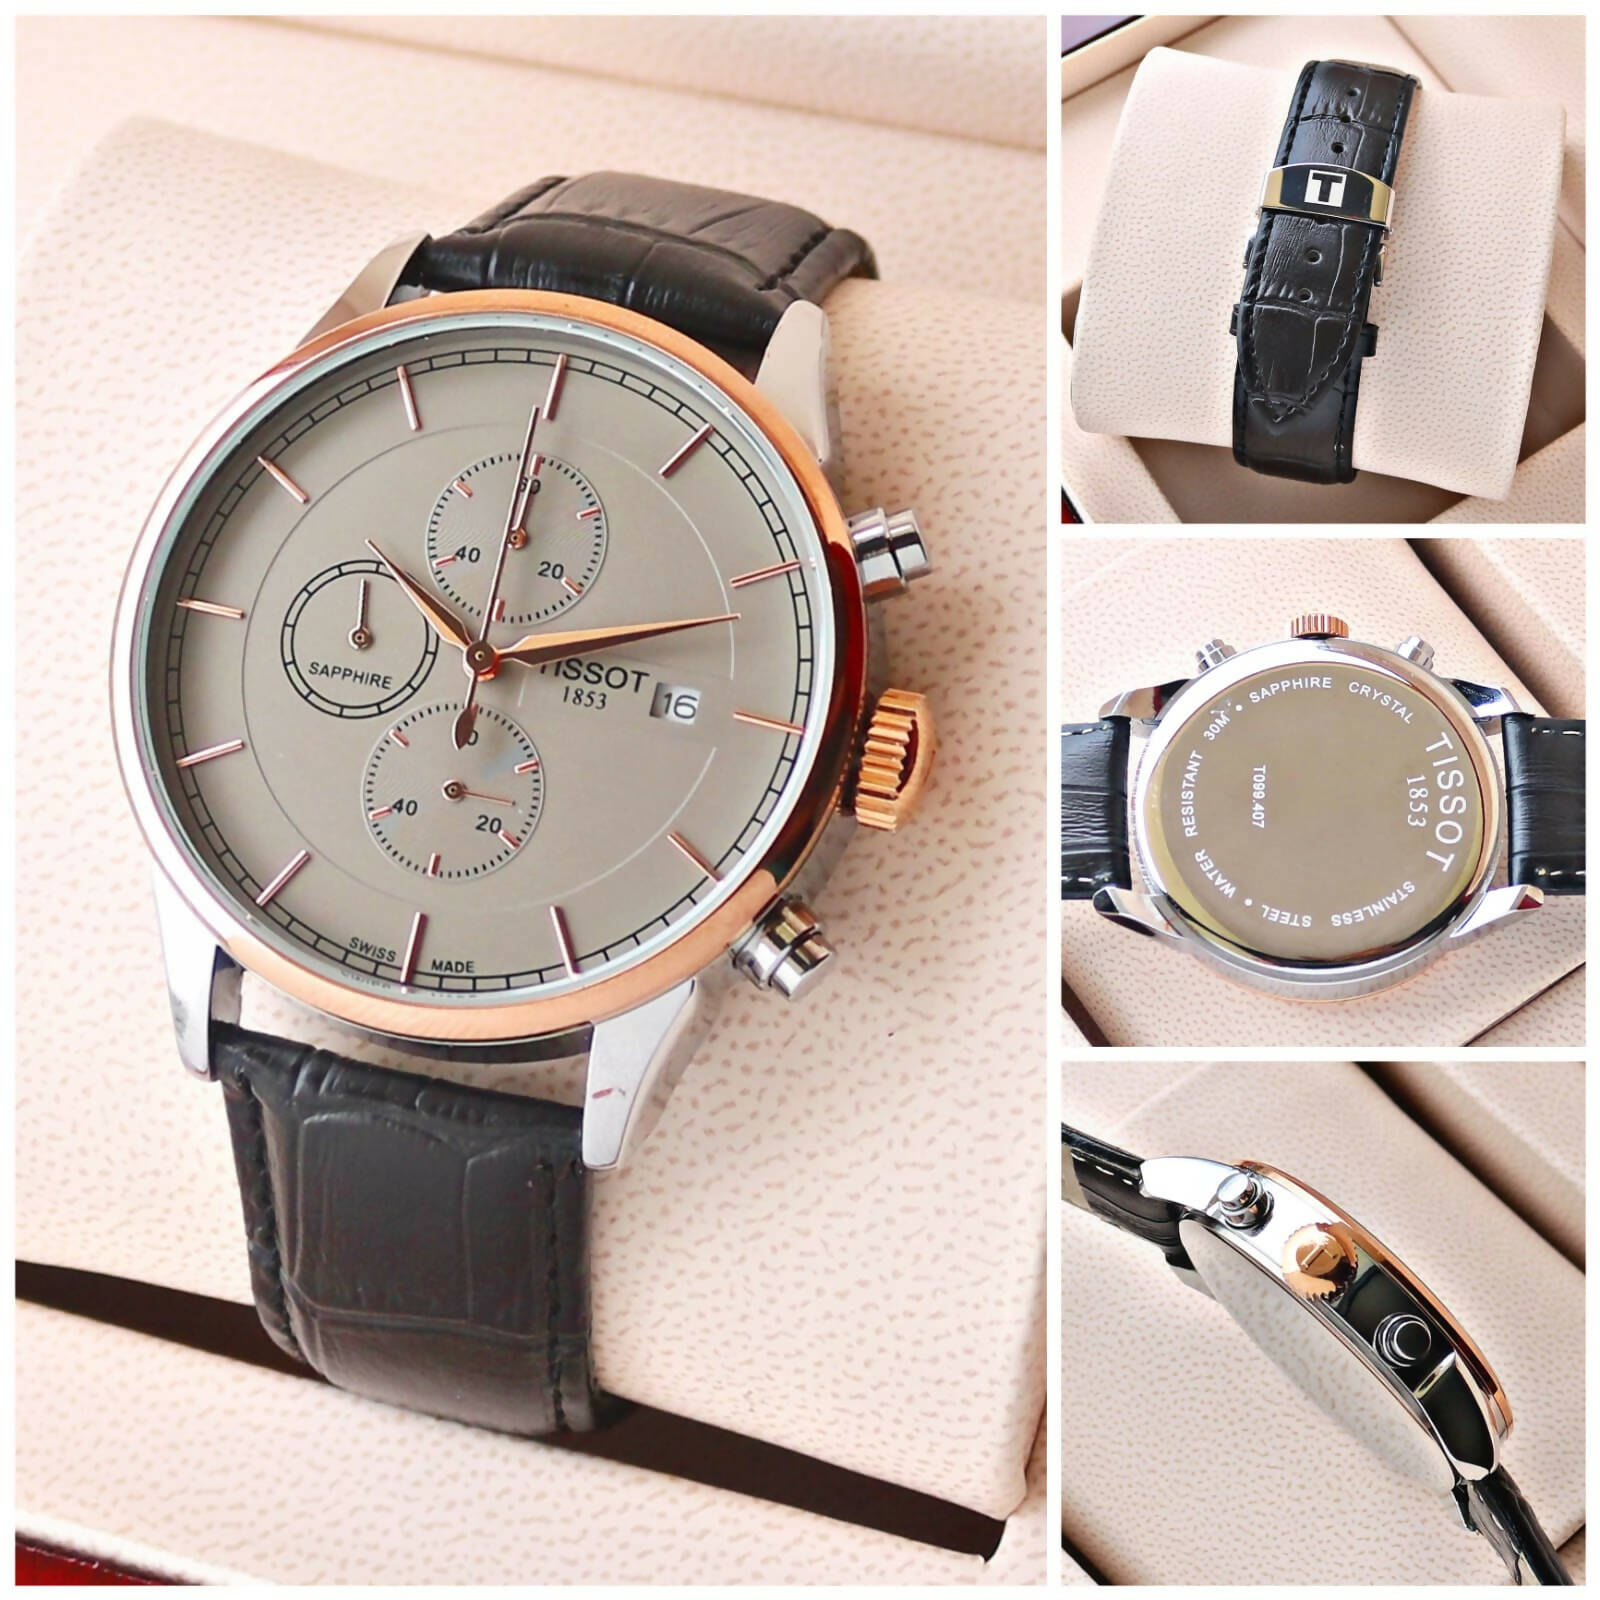 Golden Tissot 1853 Wrist Watch at Rs 2800 in Surat | ID: 2853167962562